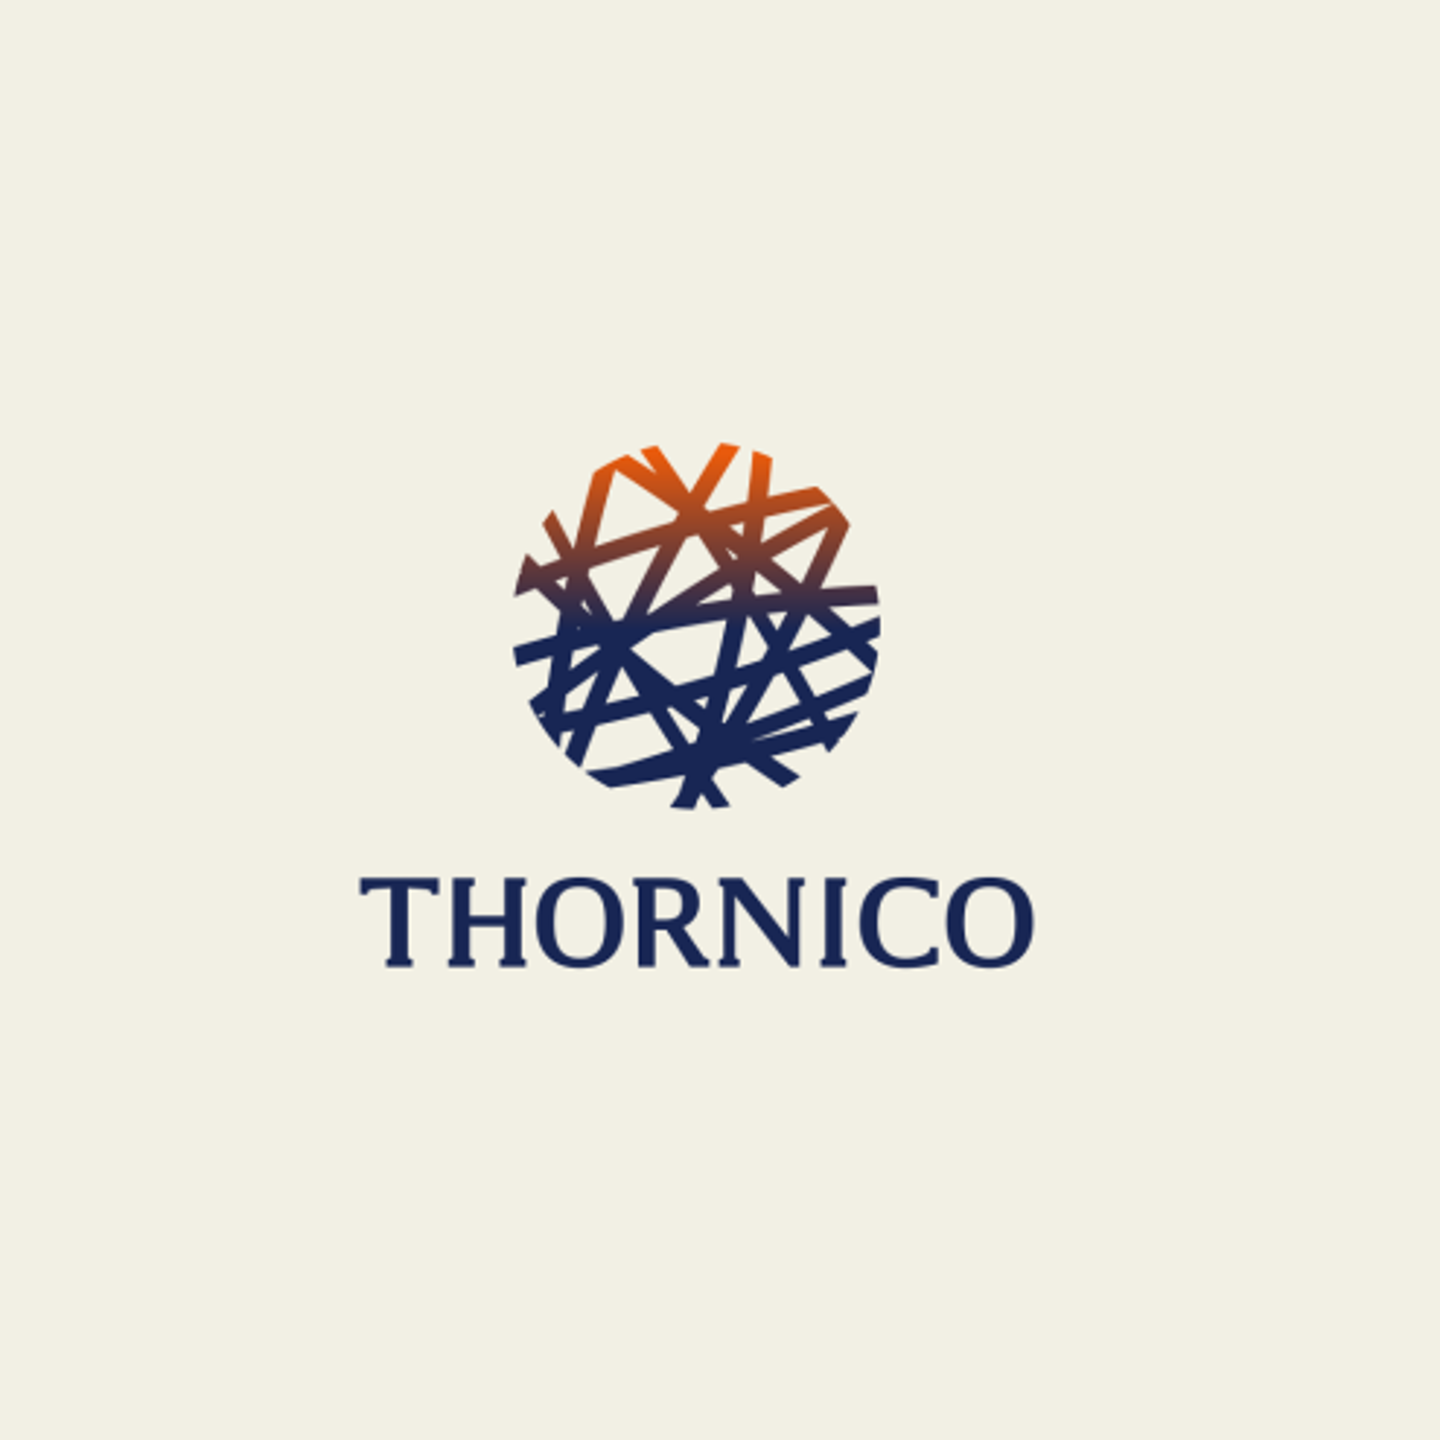 A Thornico Company